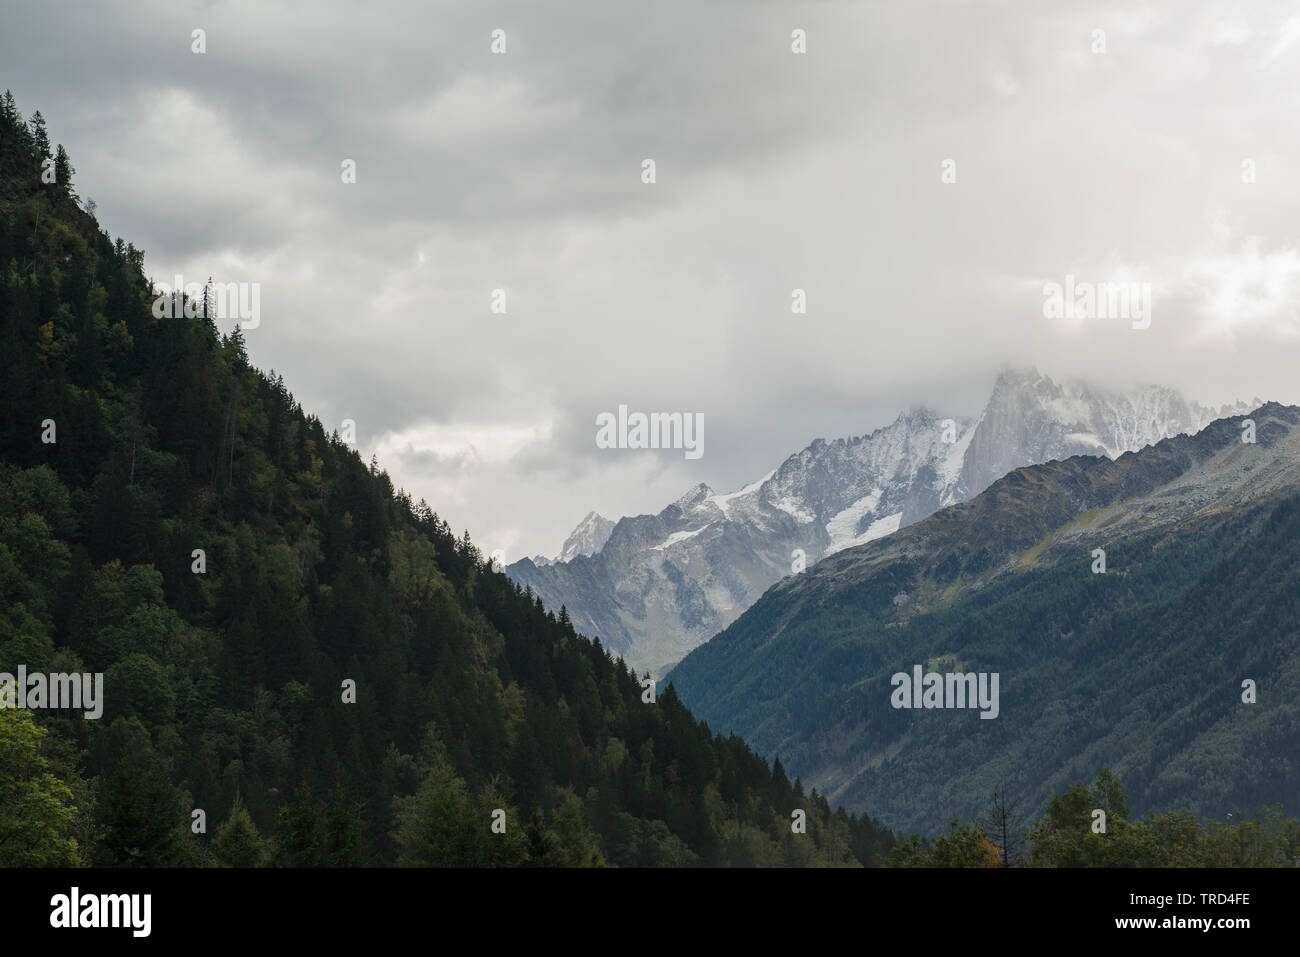 Rainy Day at French Alps, Chamonix, French Alps, Savoy, France, Europe Stock Photo